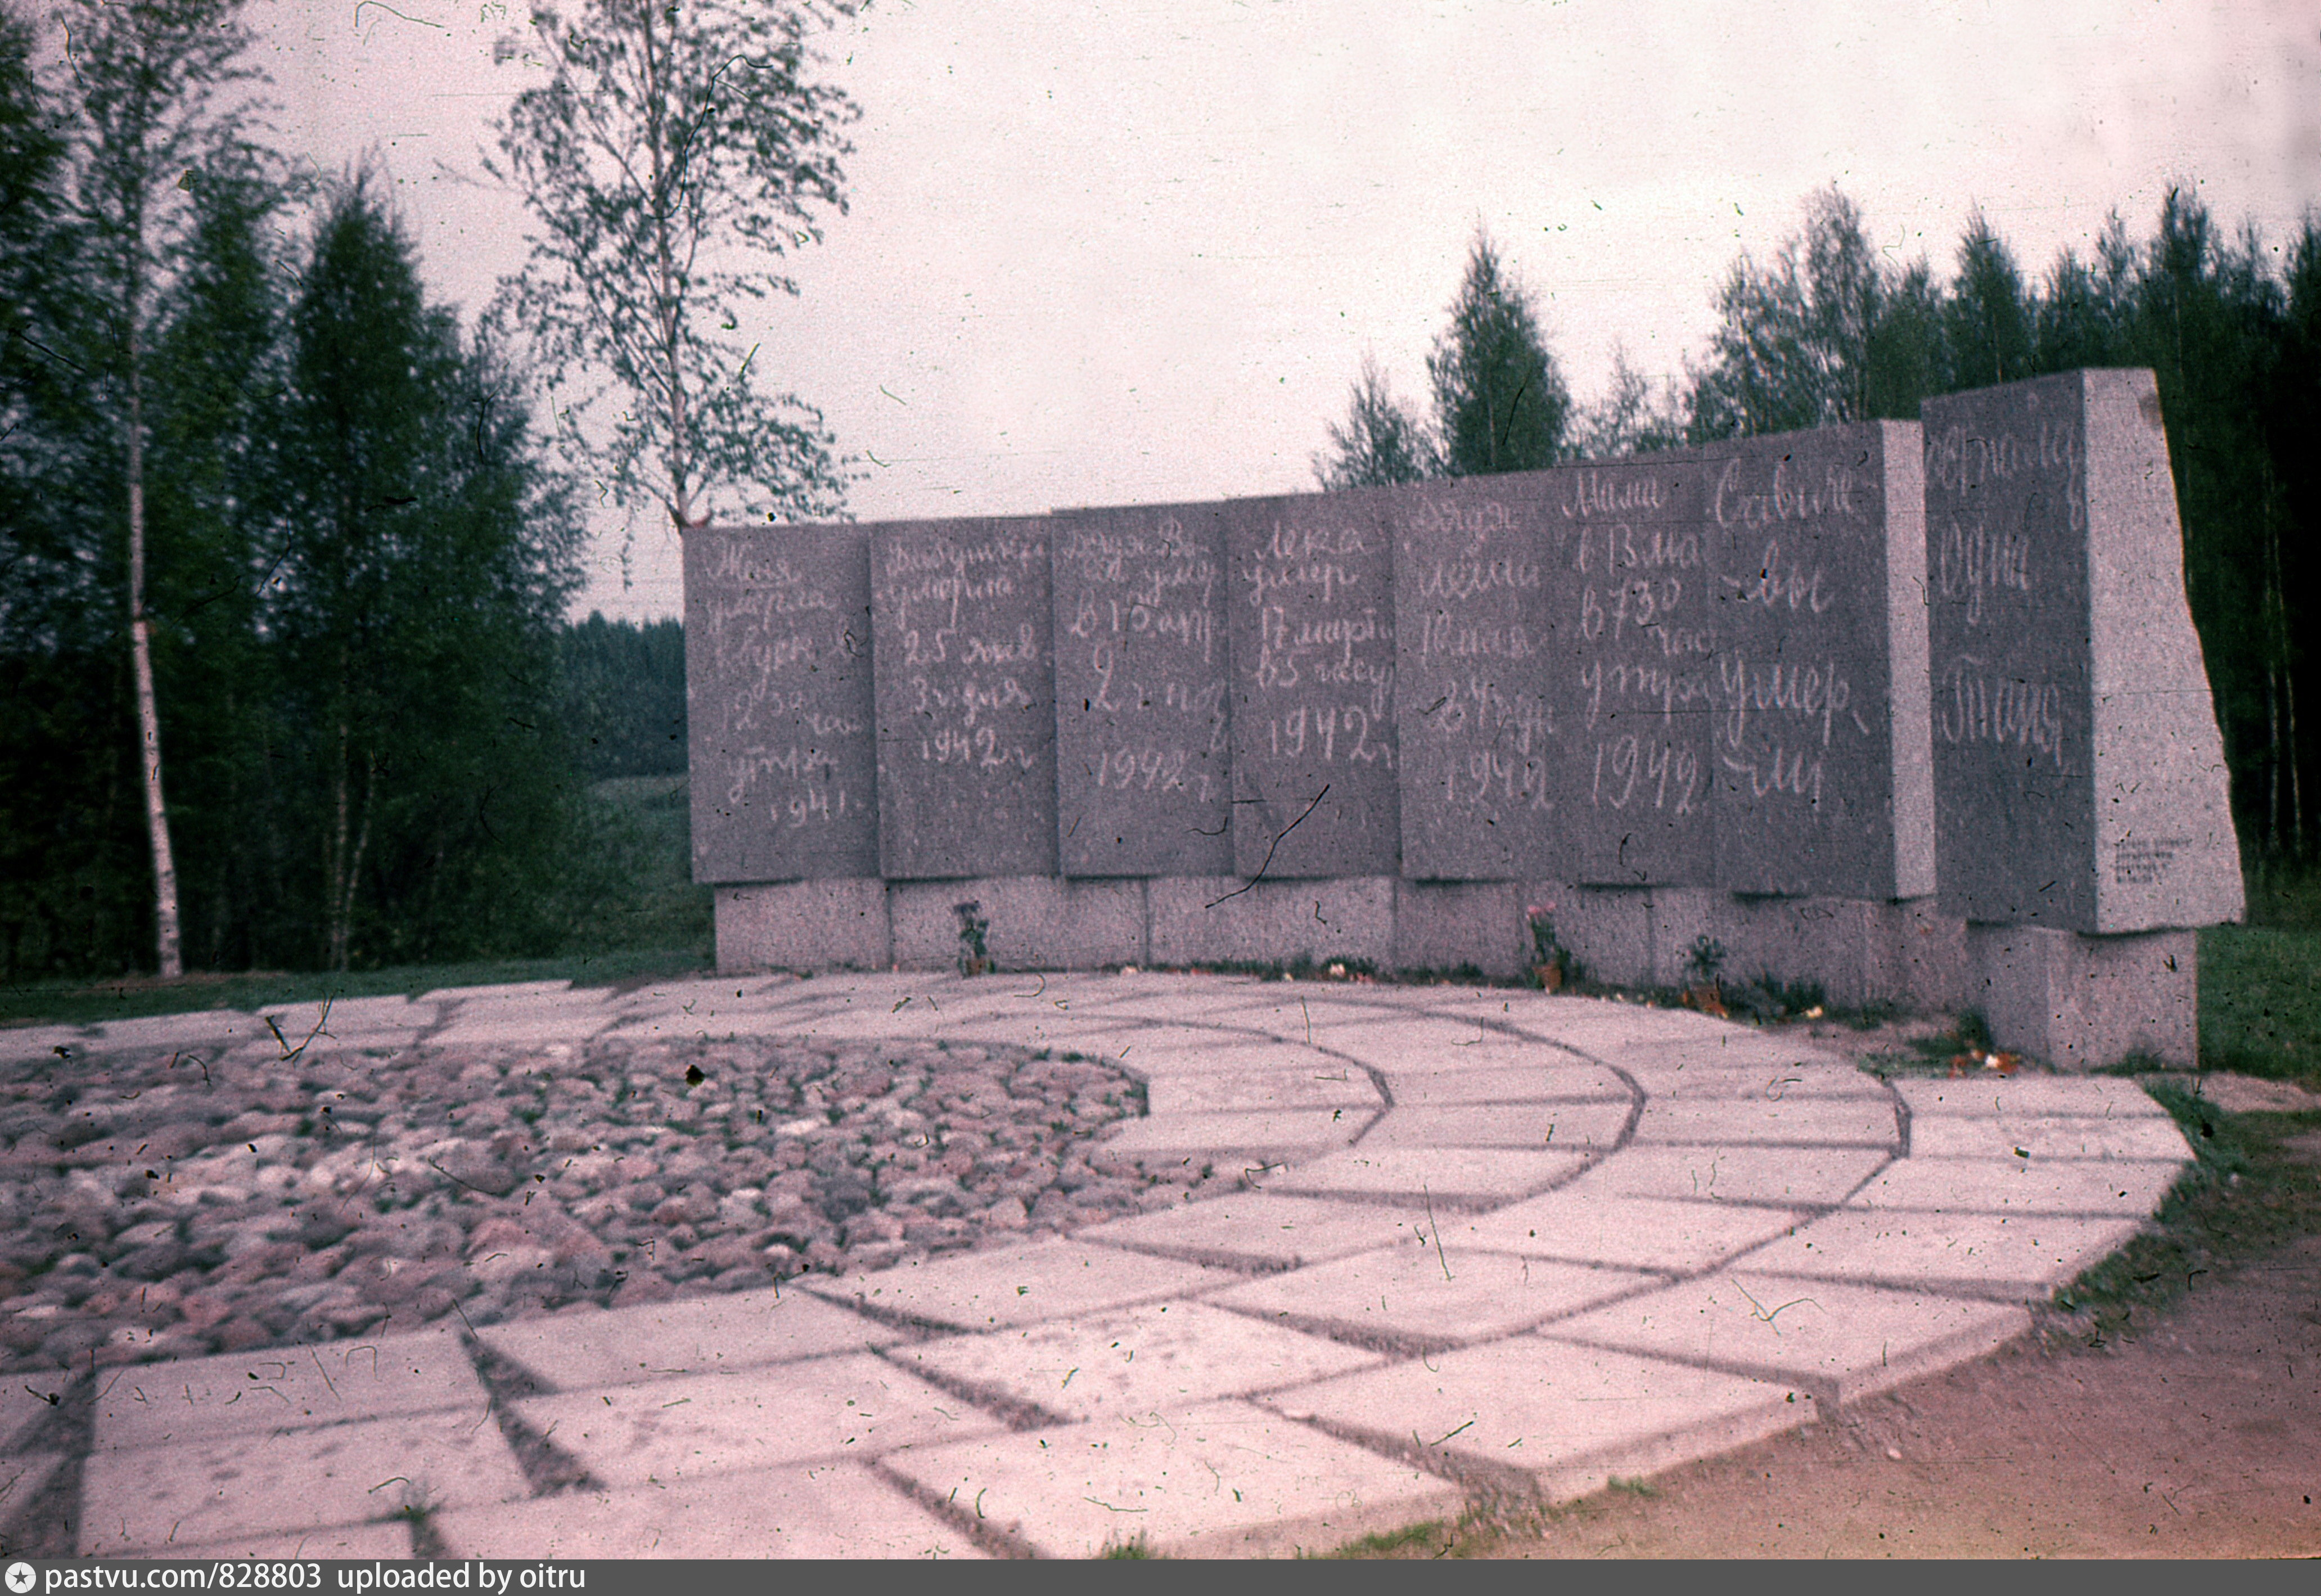 Дневник тани савичевой фото памятника